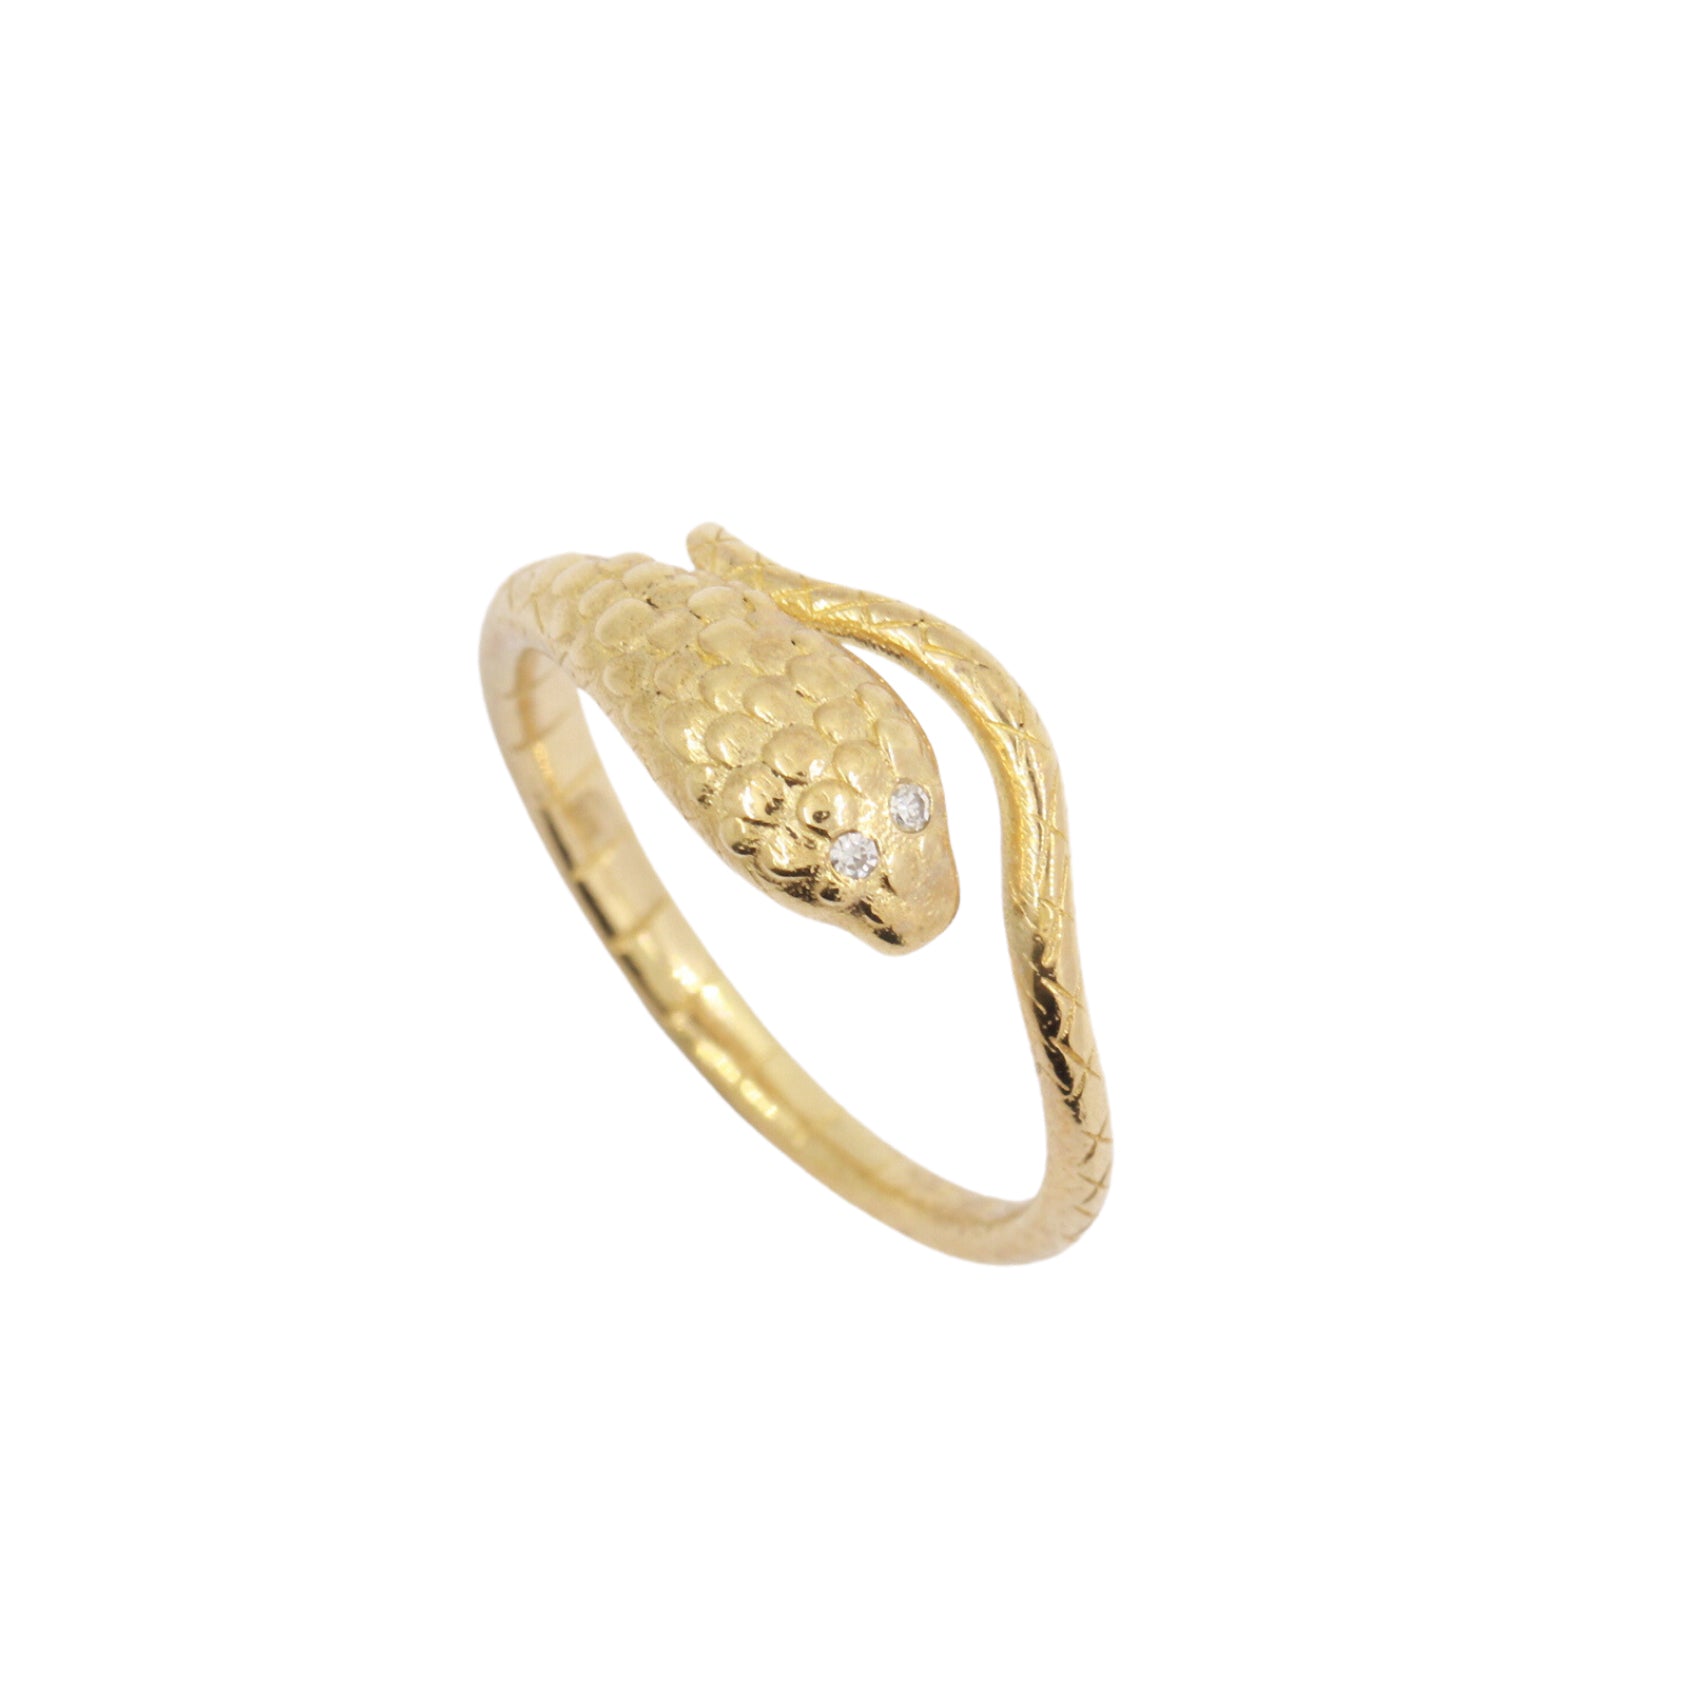 Shop Gosia Orlowska's Stunning Ring